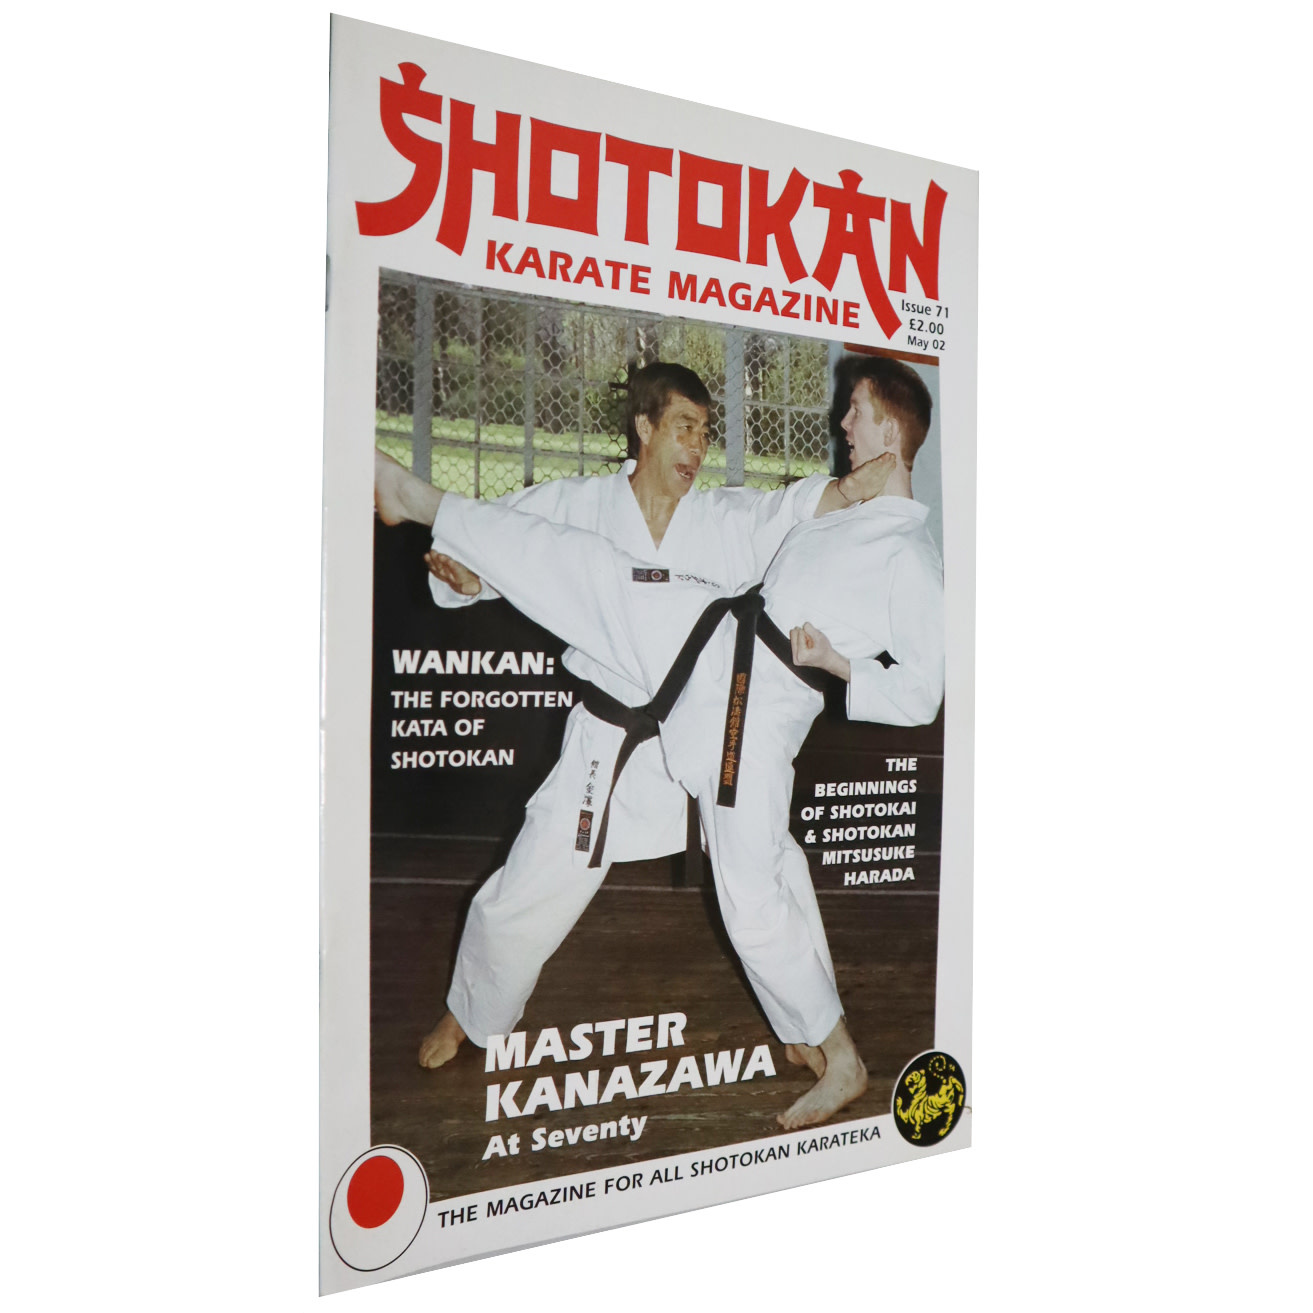 Shotokan Karate Magazine Issue 71 Enso Martial Arts Shop Bristol 